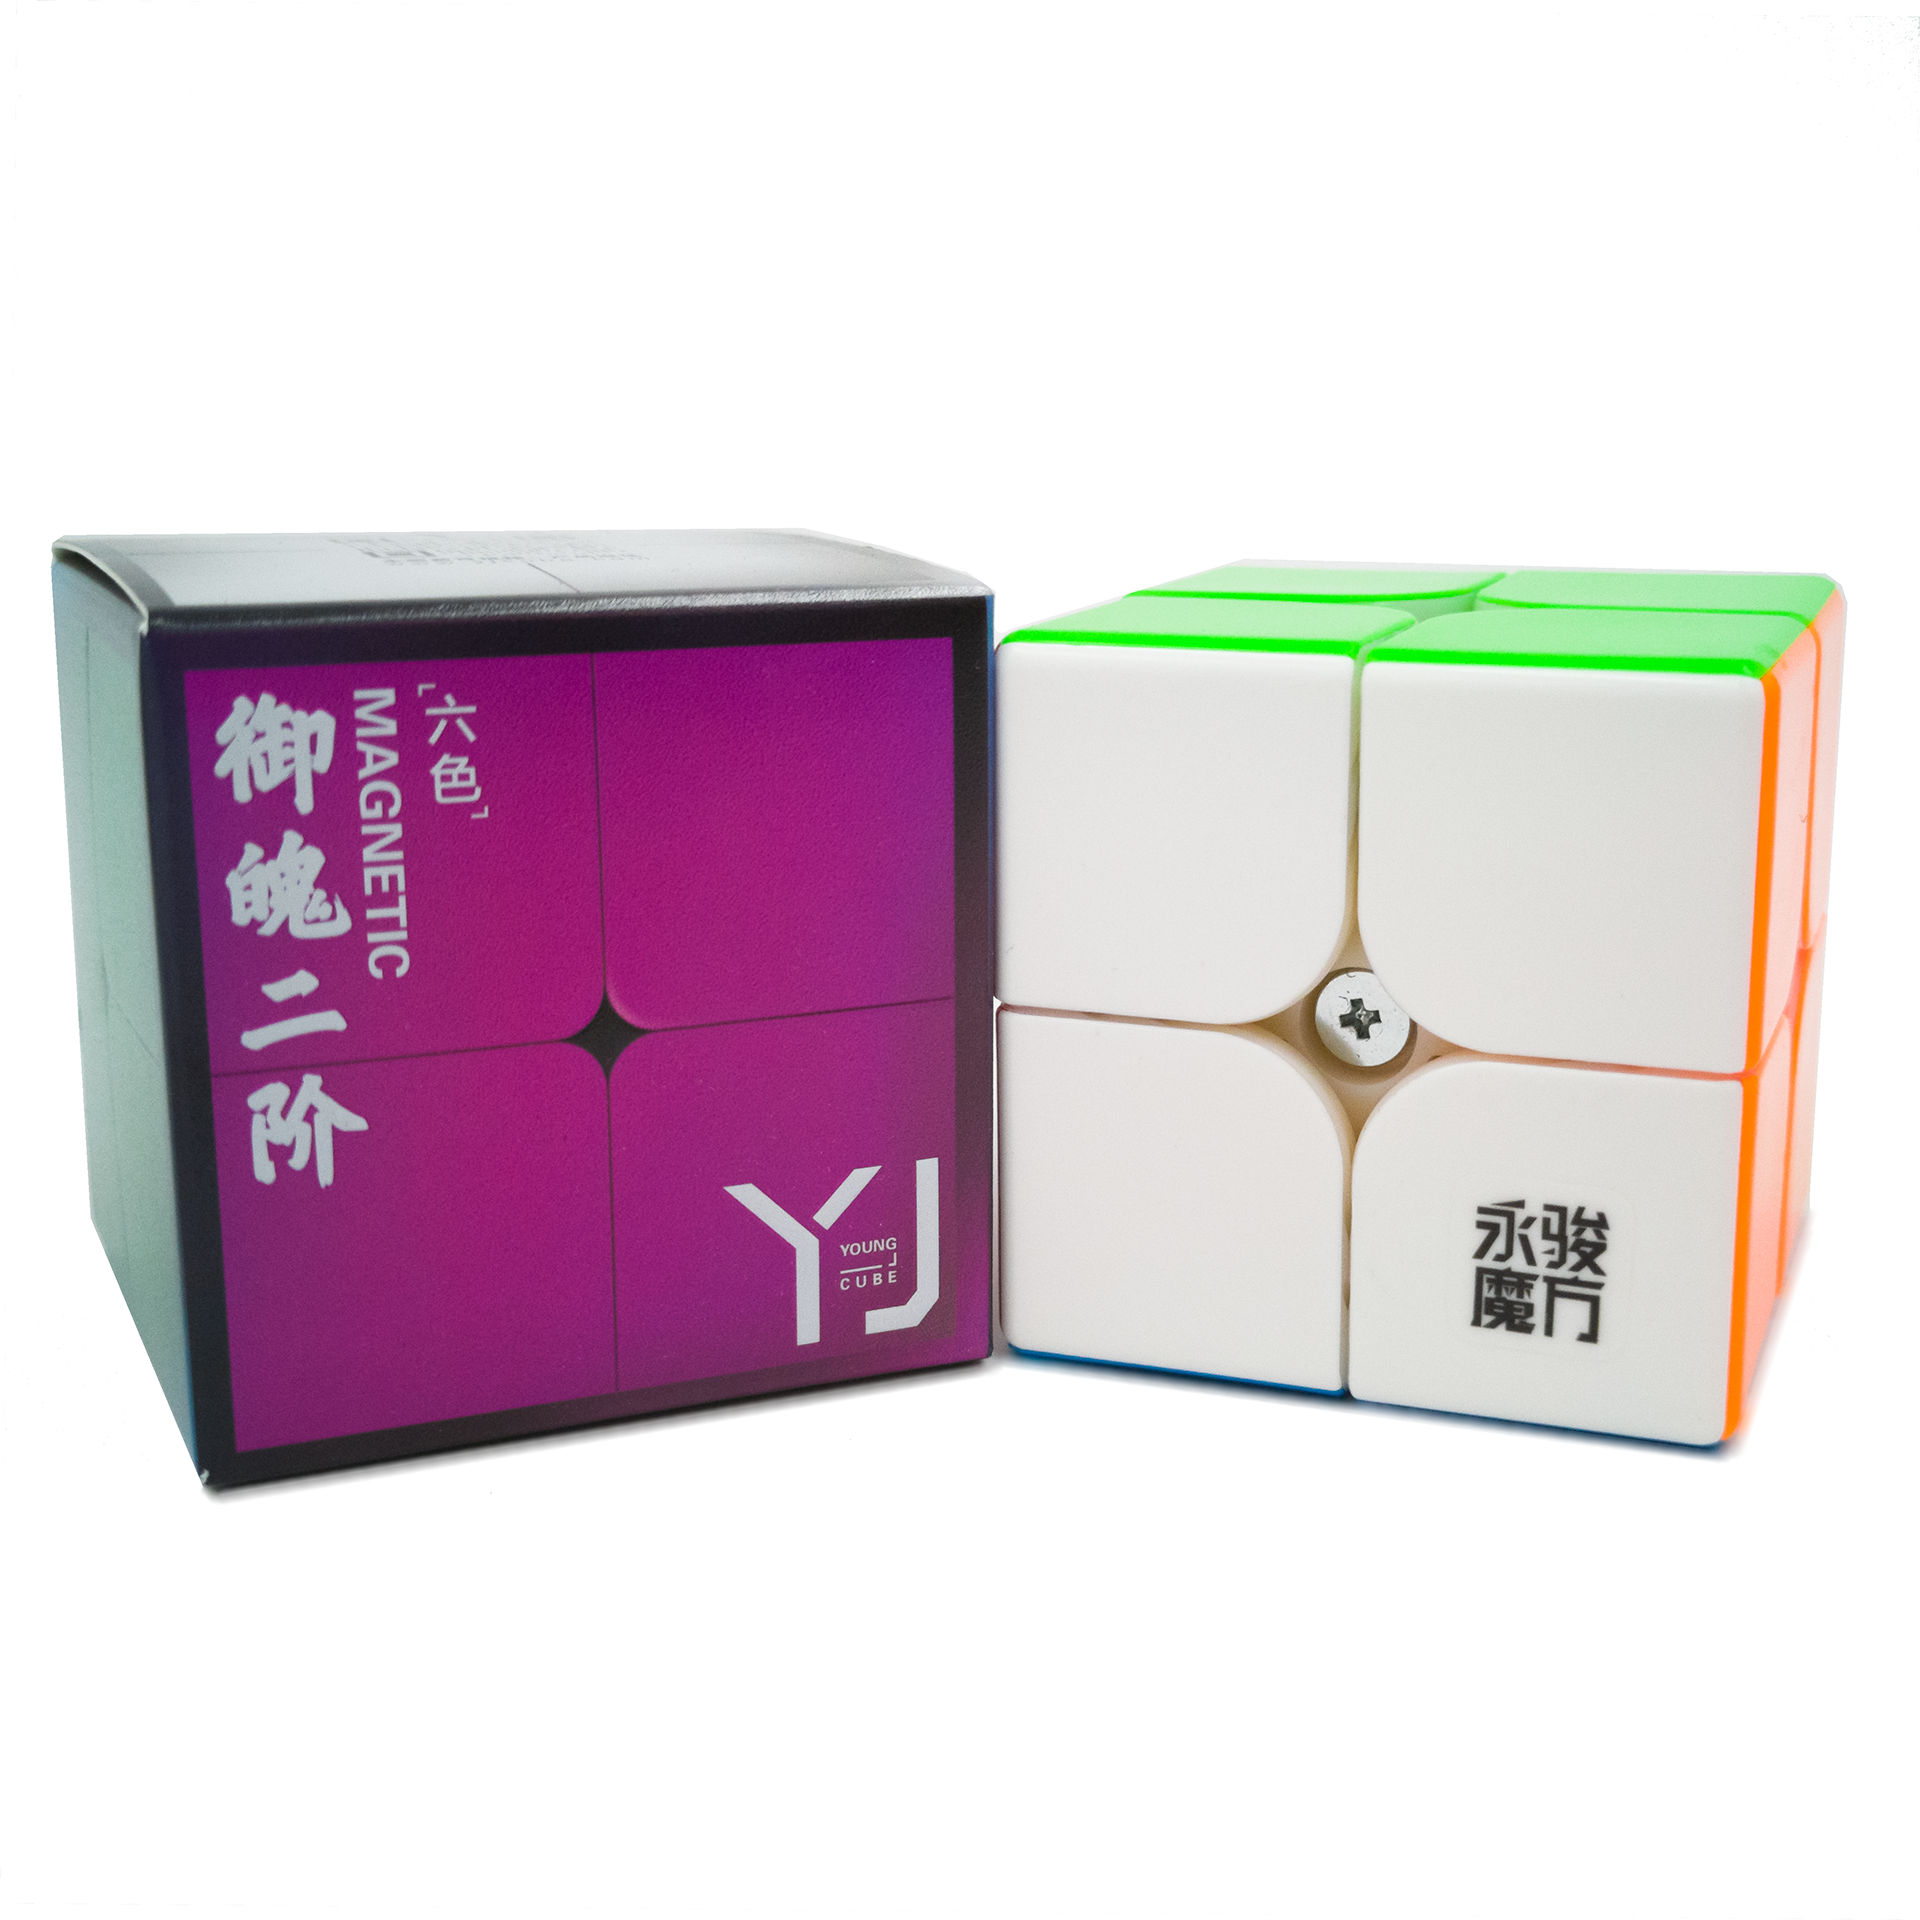 YJ YuPo V2 M 2x2 - CuberSpace